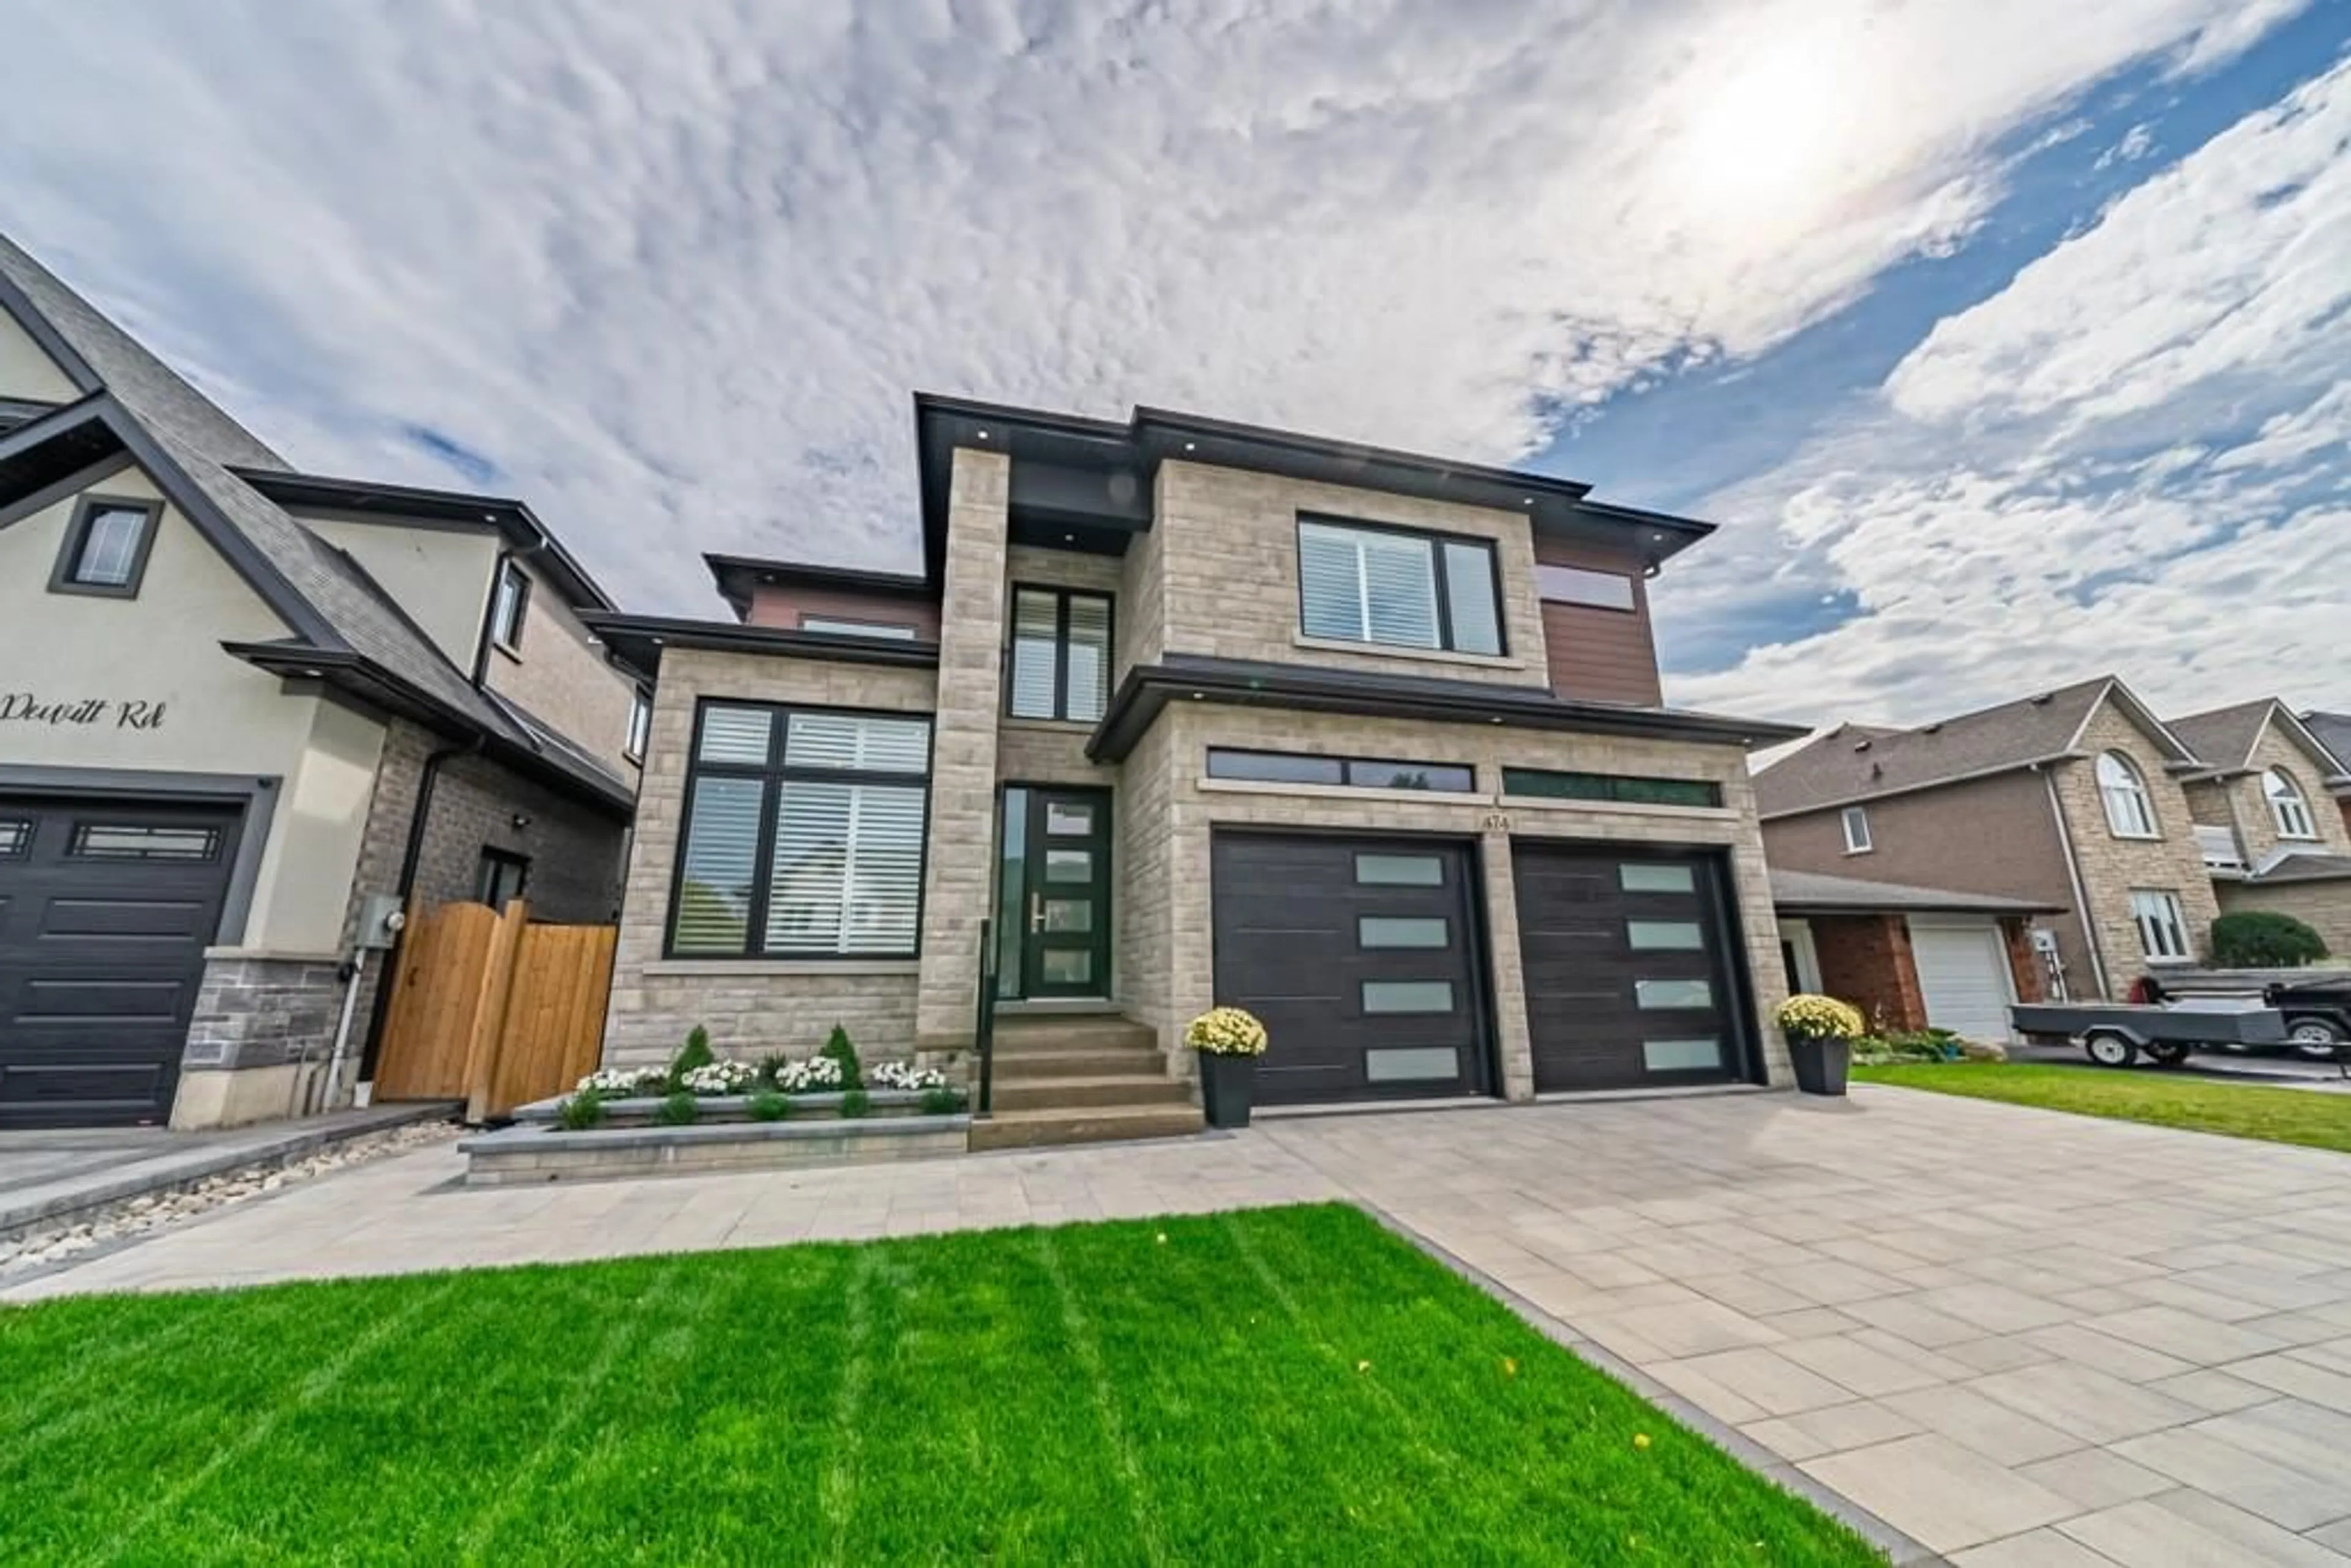 Home with brick exterior material for 474 Dewitt Rd, Stoney Creek Ontario L8E 5A5